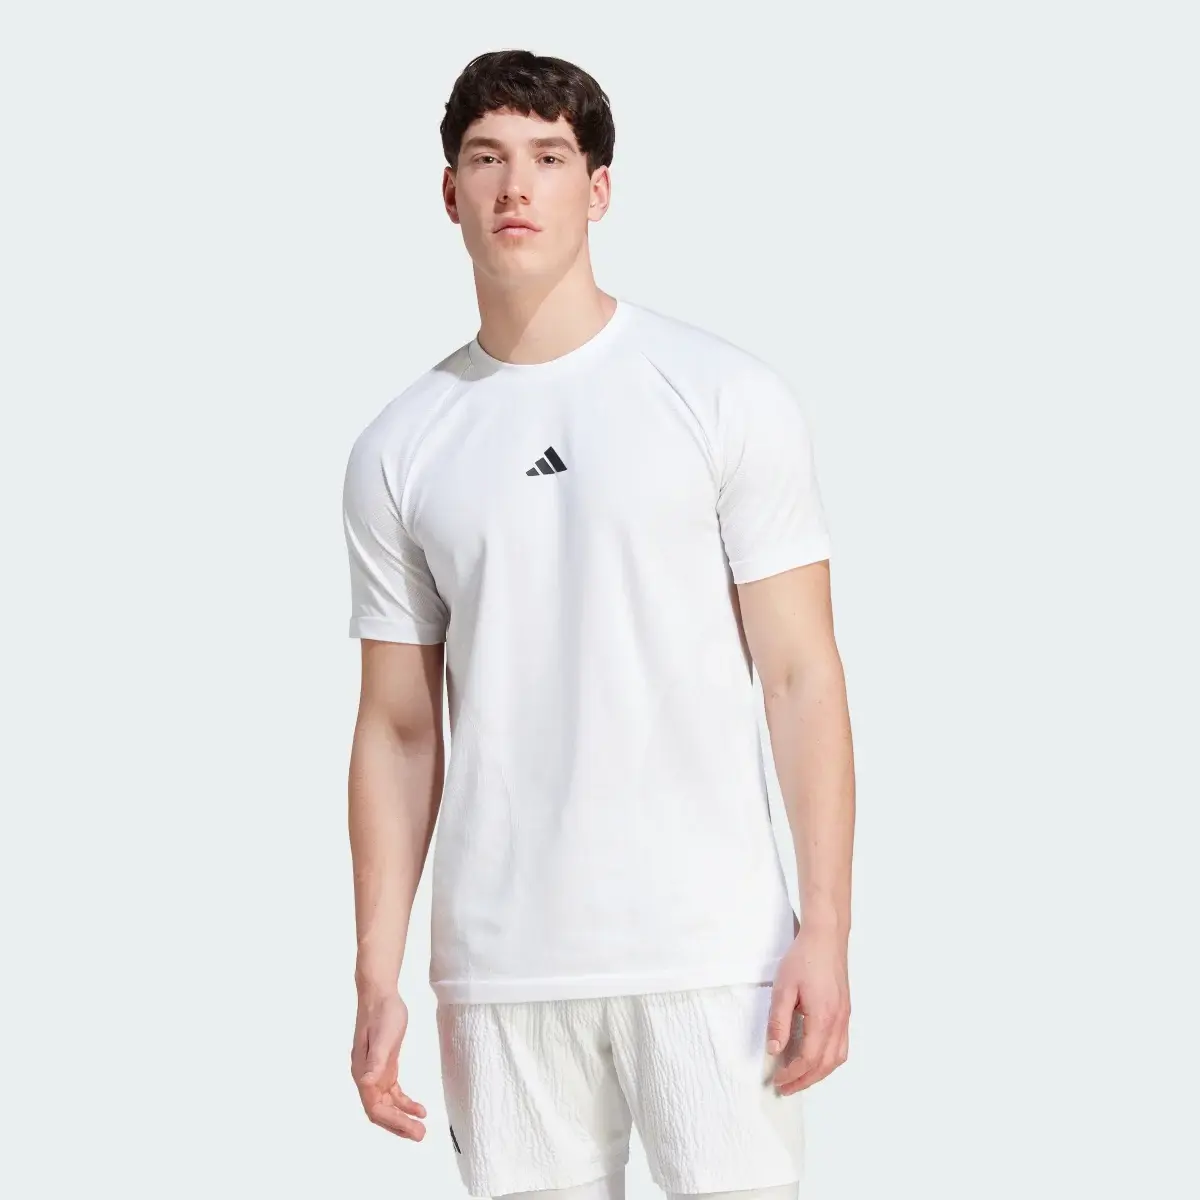 Adidas AEROREADY Pro Seamless Tennis T-Shirt. 2